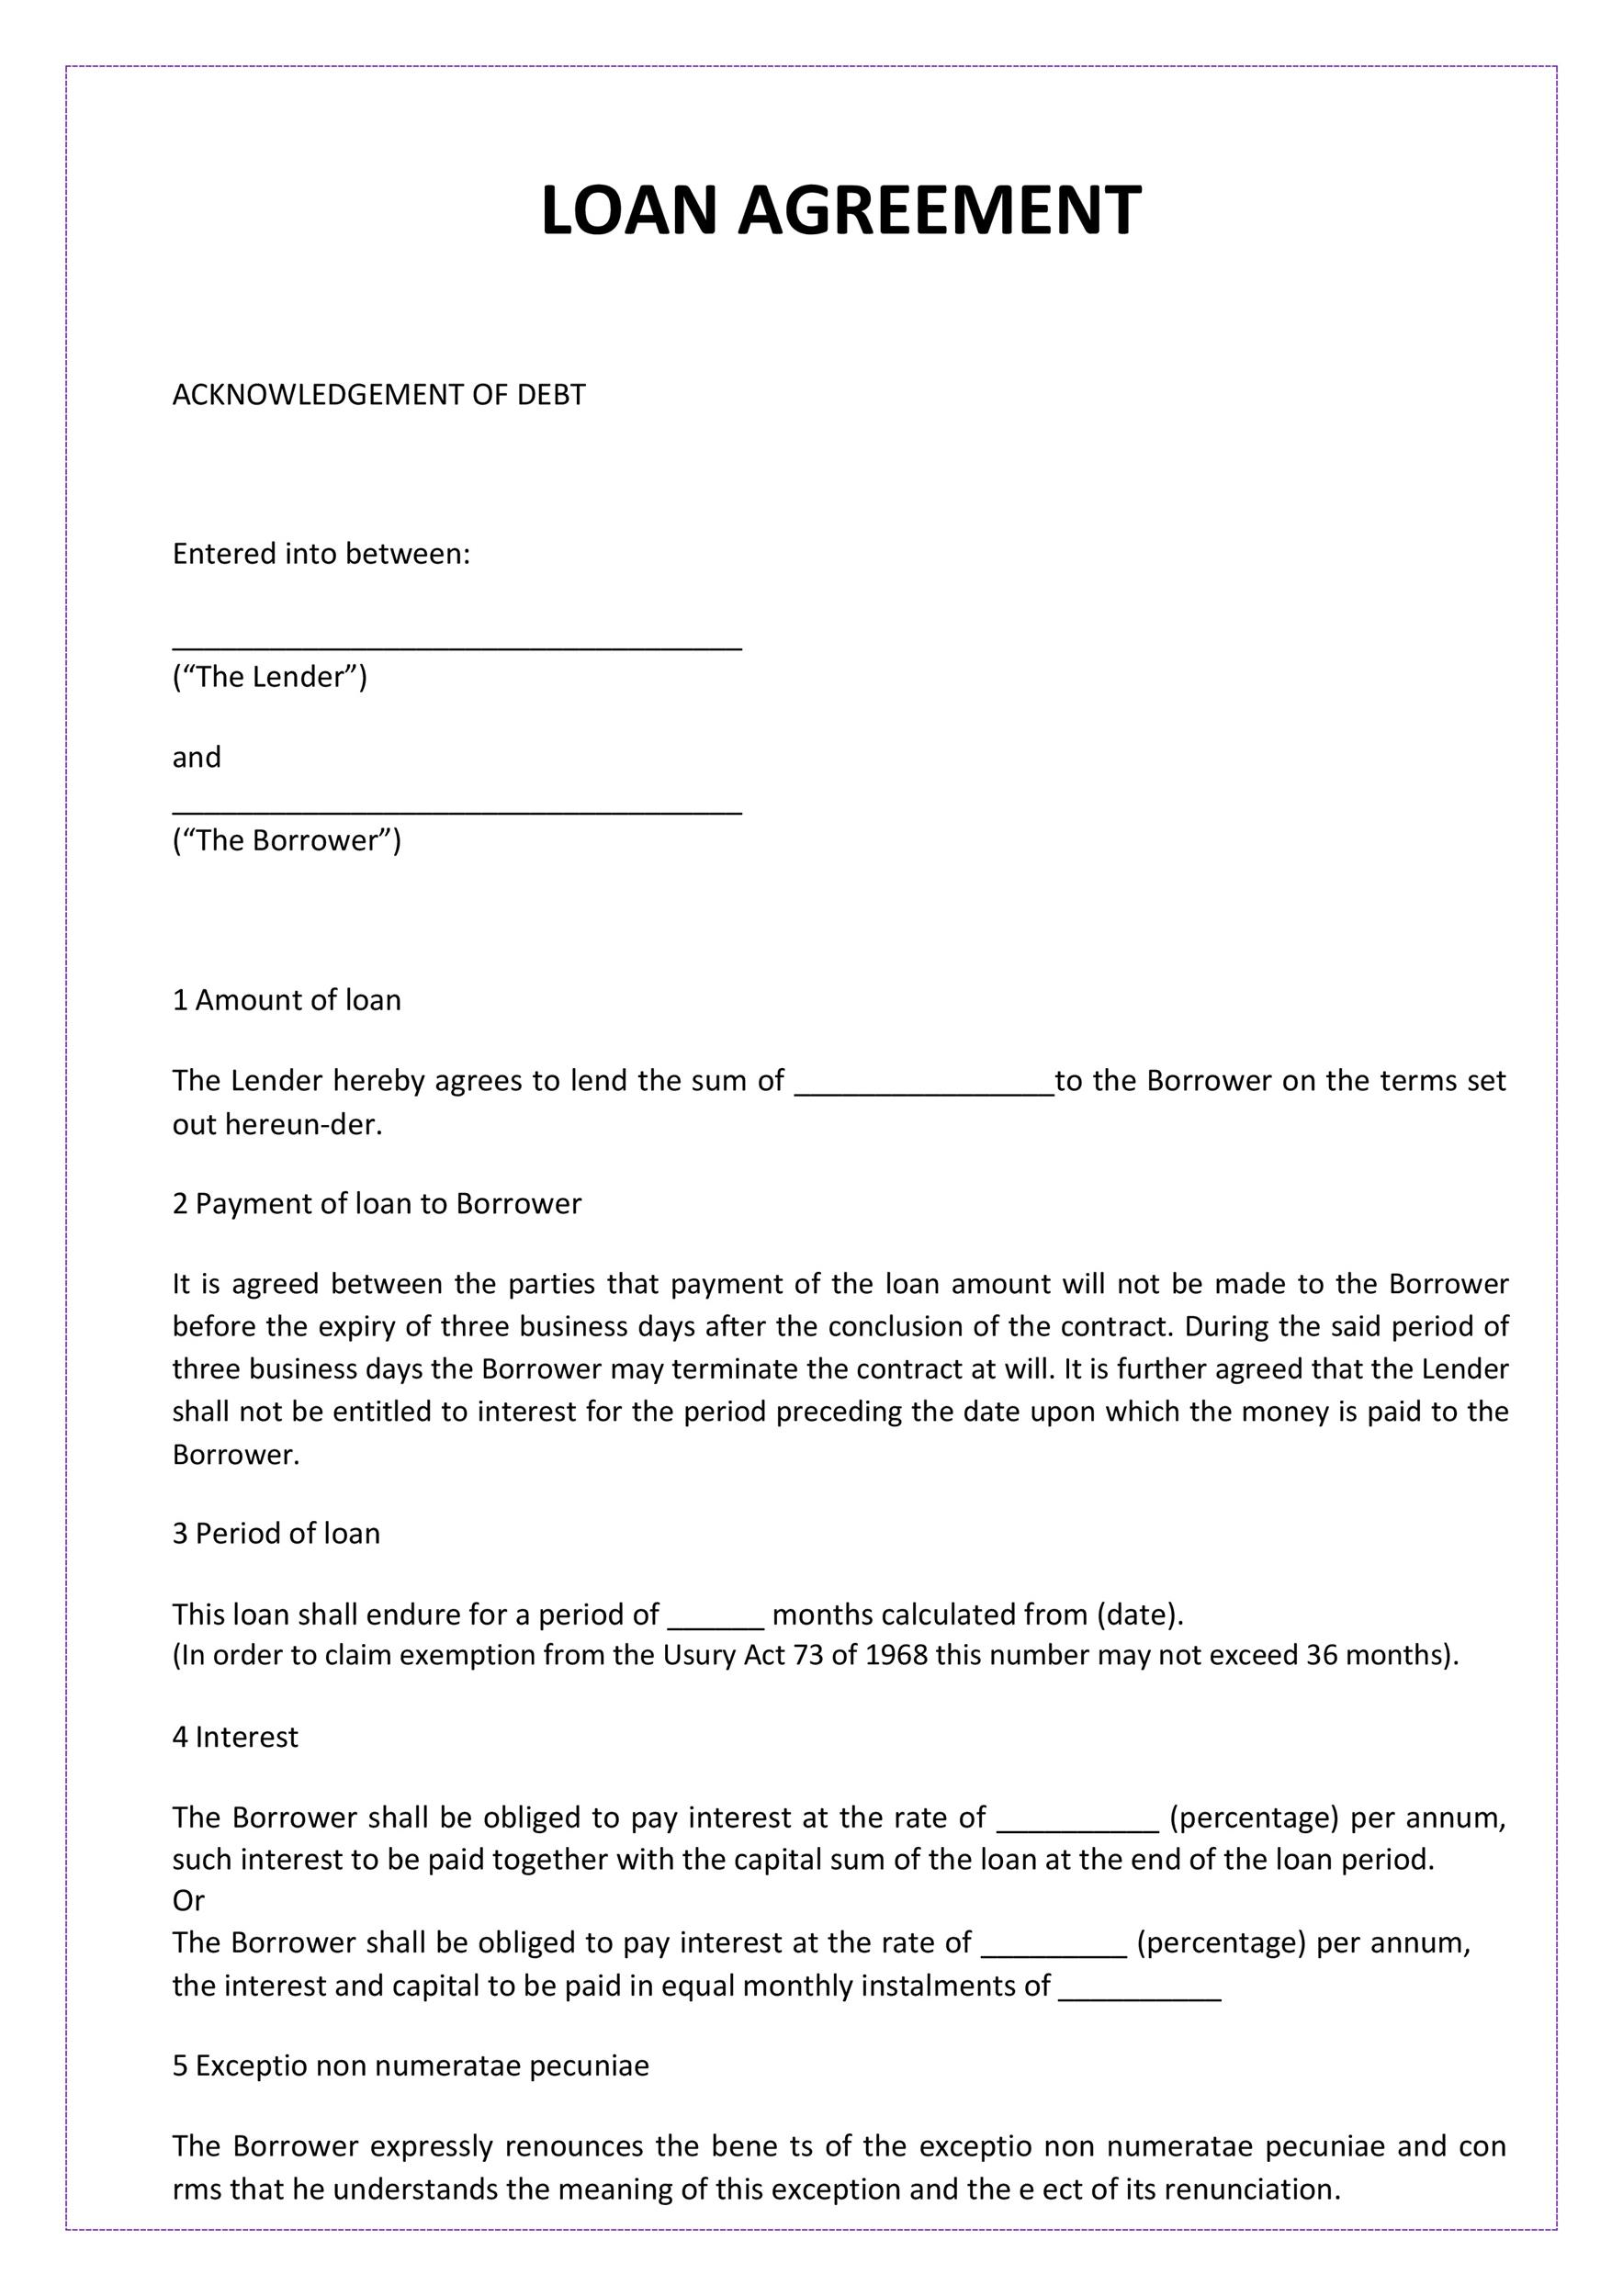 Free loan agreement template 04